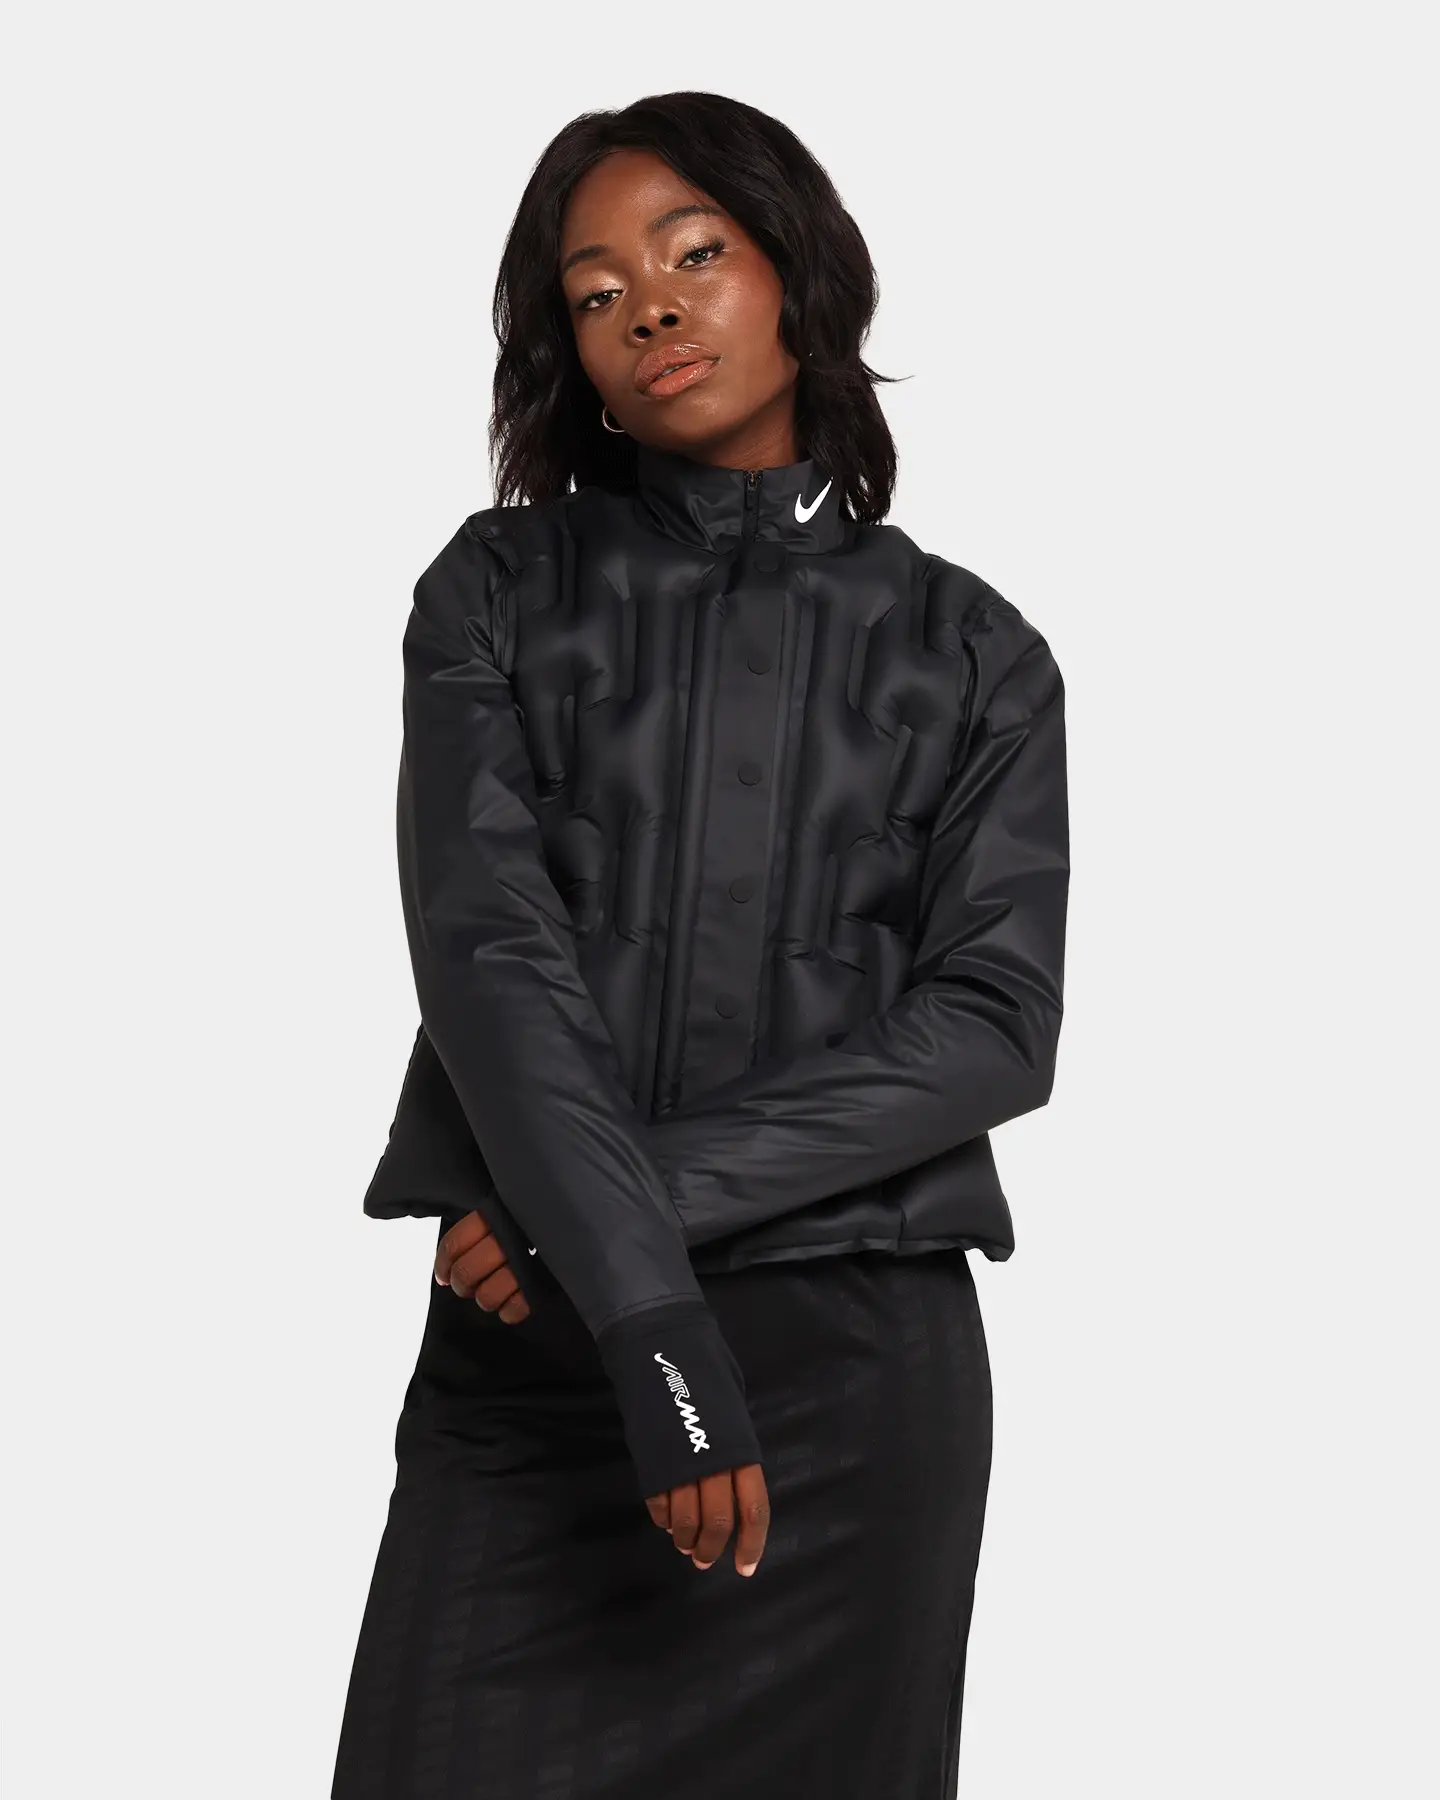 Nike Women's Nike Sportswear Inflatable Jacket Black - Size 10 (M)